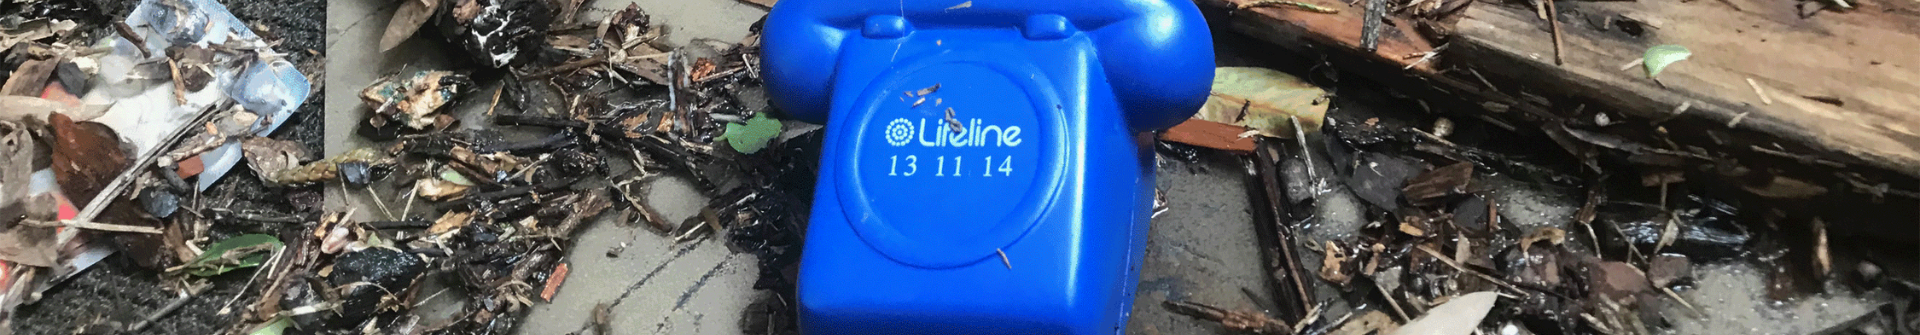 Lifeline phone of hope lismore